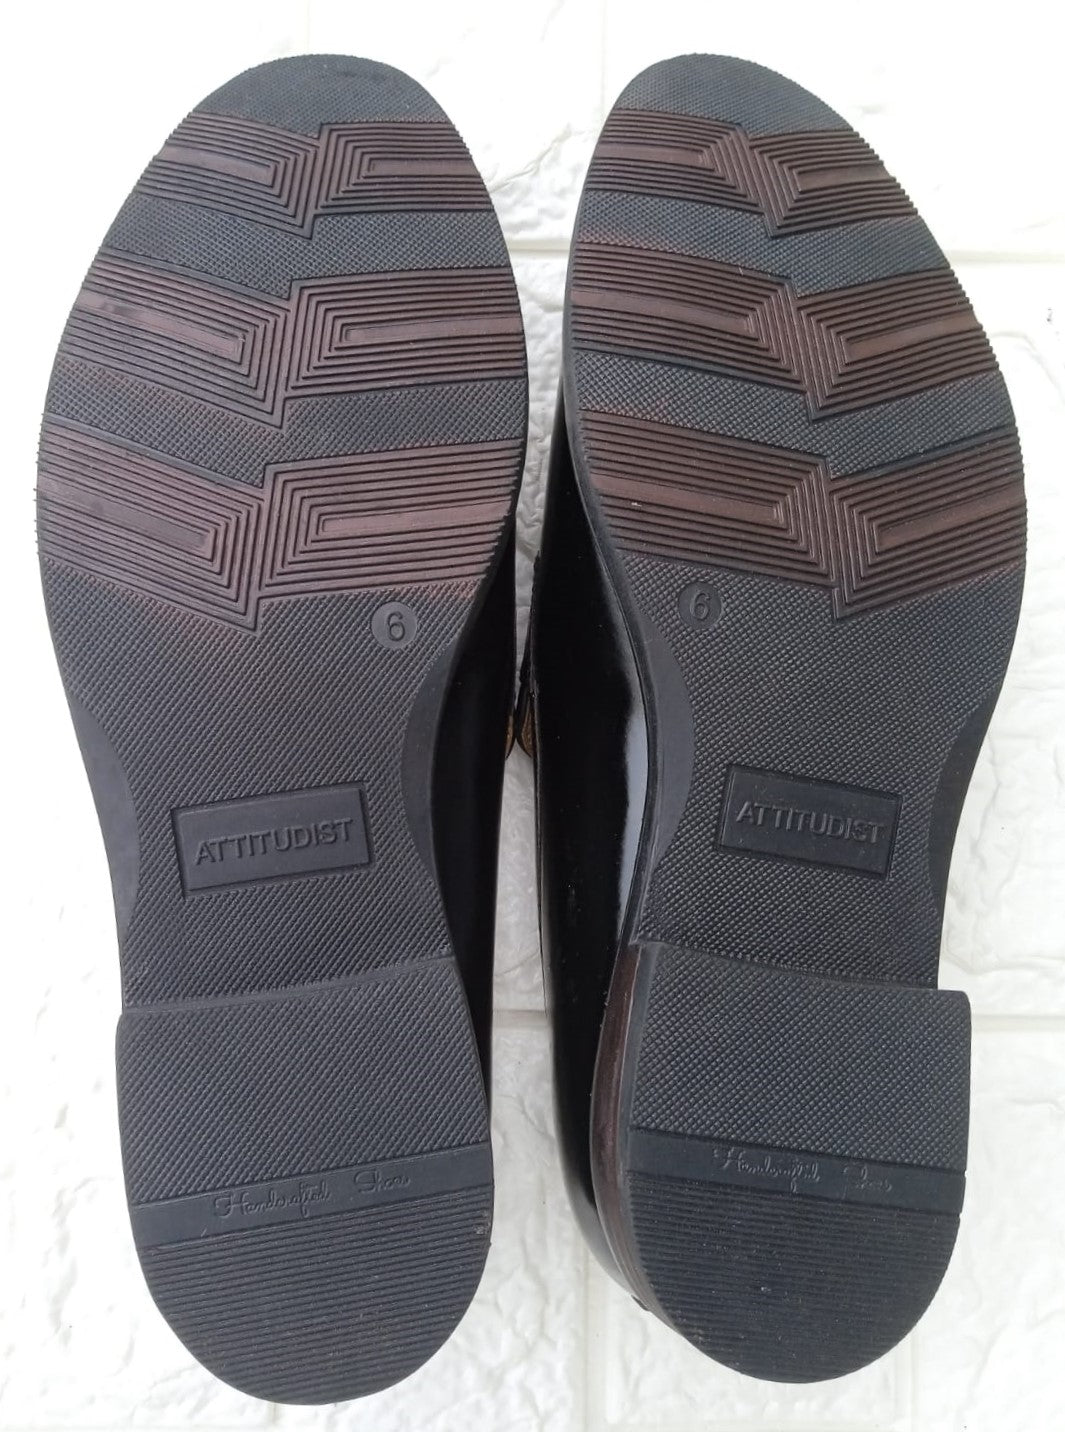 Slipon Shoes For Men - Defective